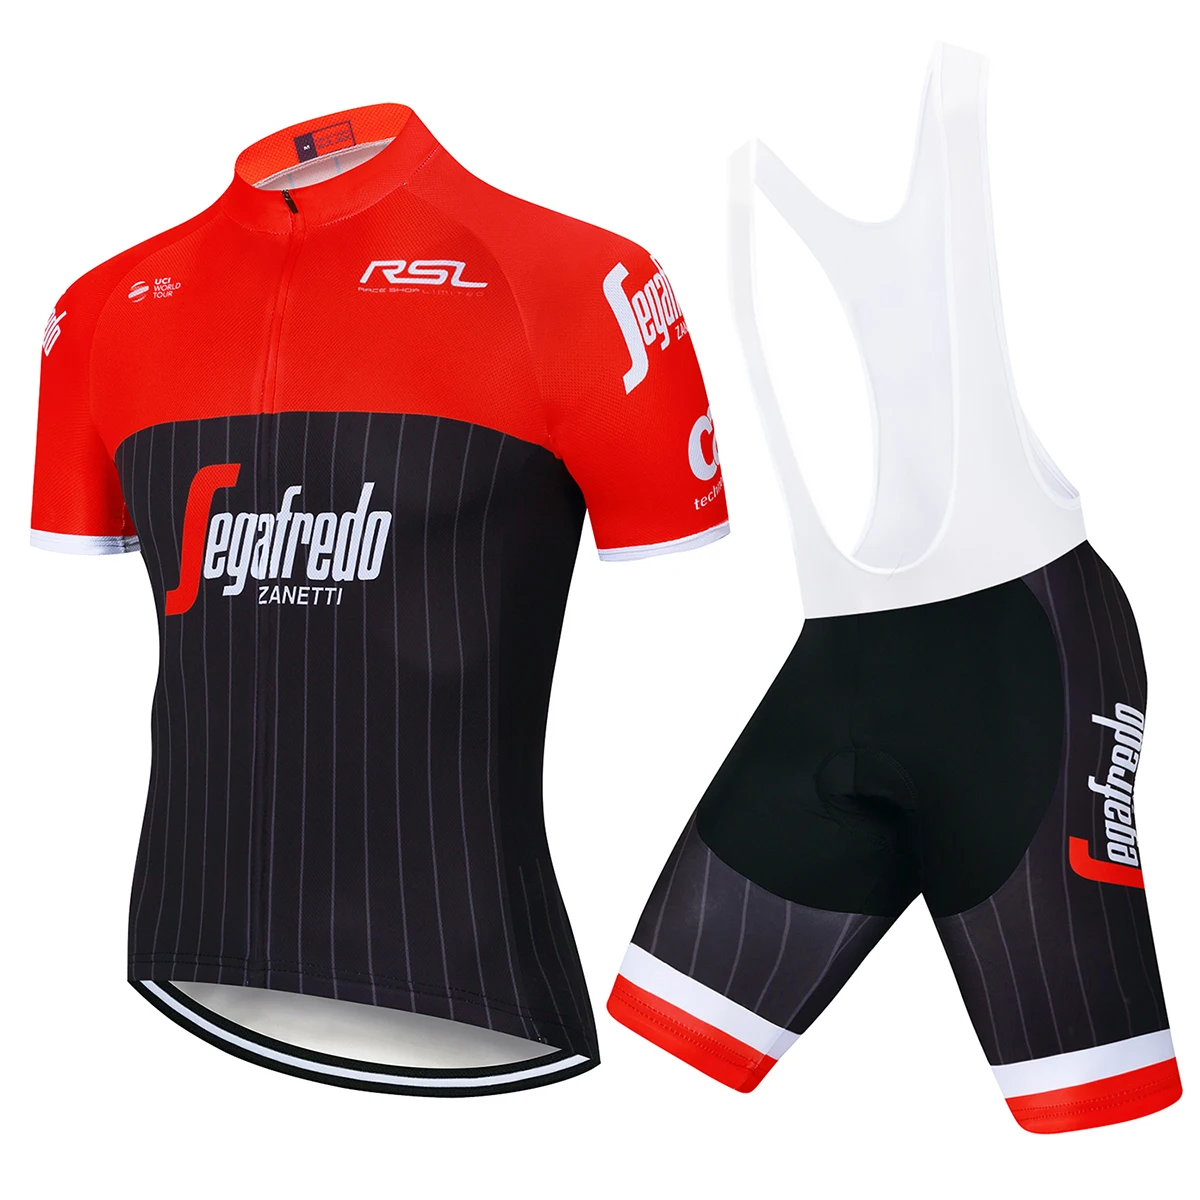 RED TERKKING Команда Лето Pro Спортивные Гонки UCI world Тур pro Велоспорт Джерси Набор велошорт ropa ciclismo велосипедная одежда